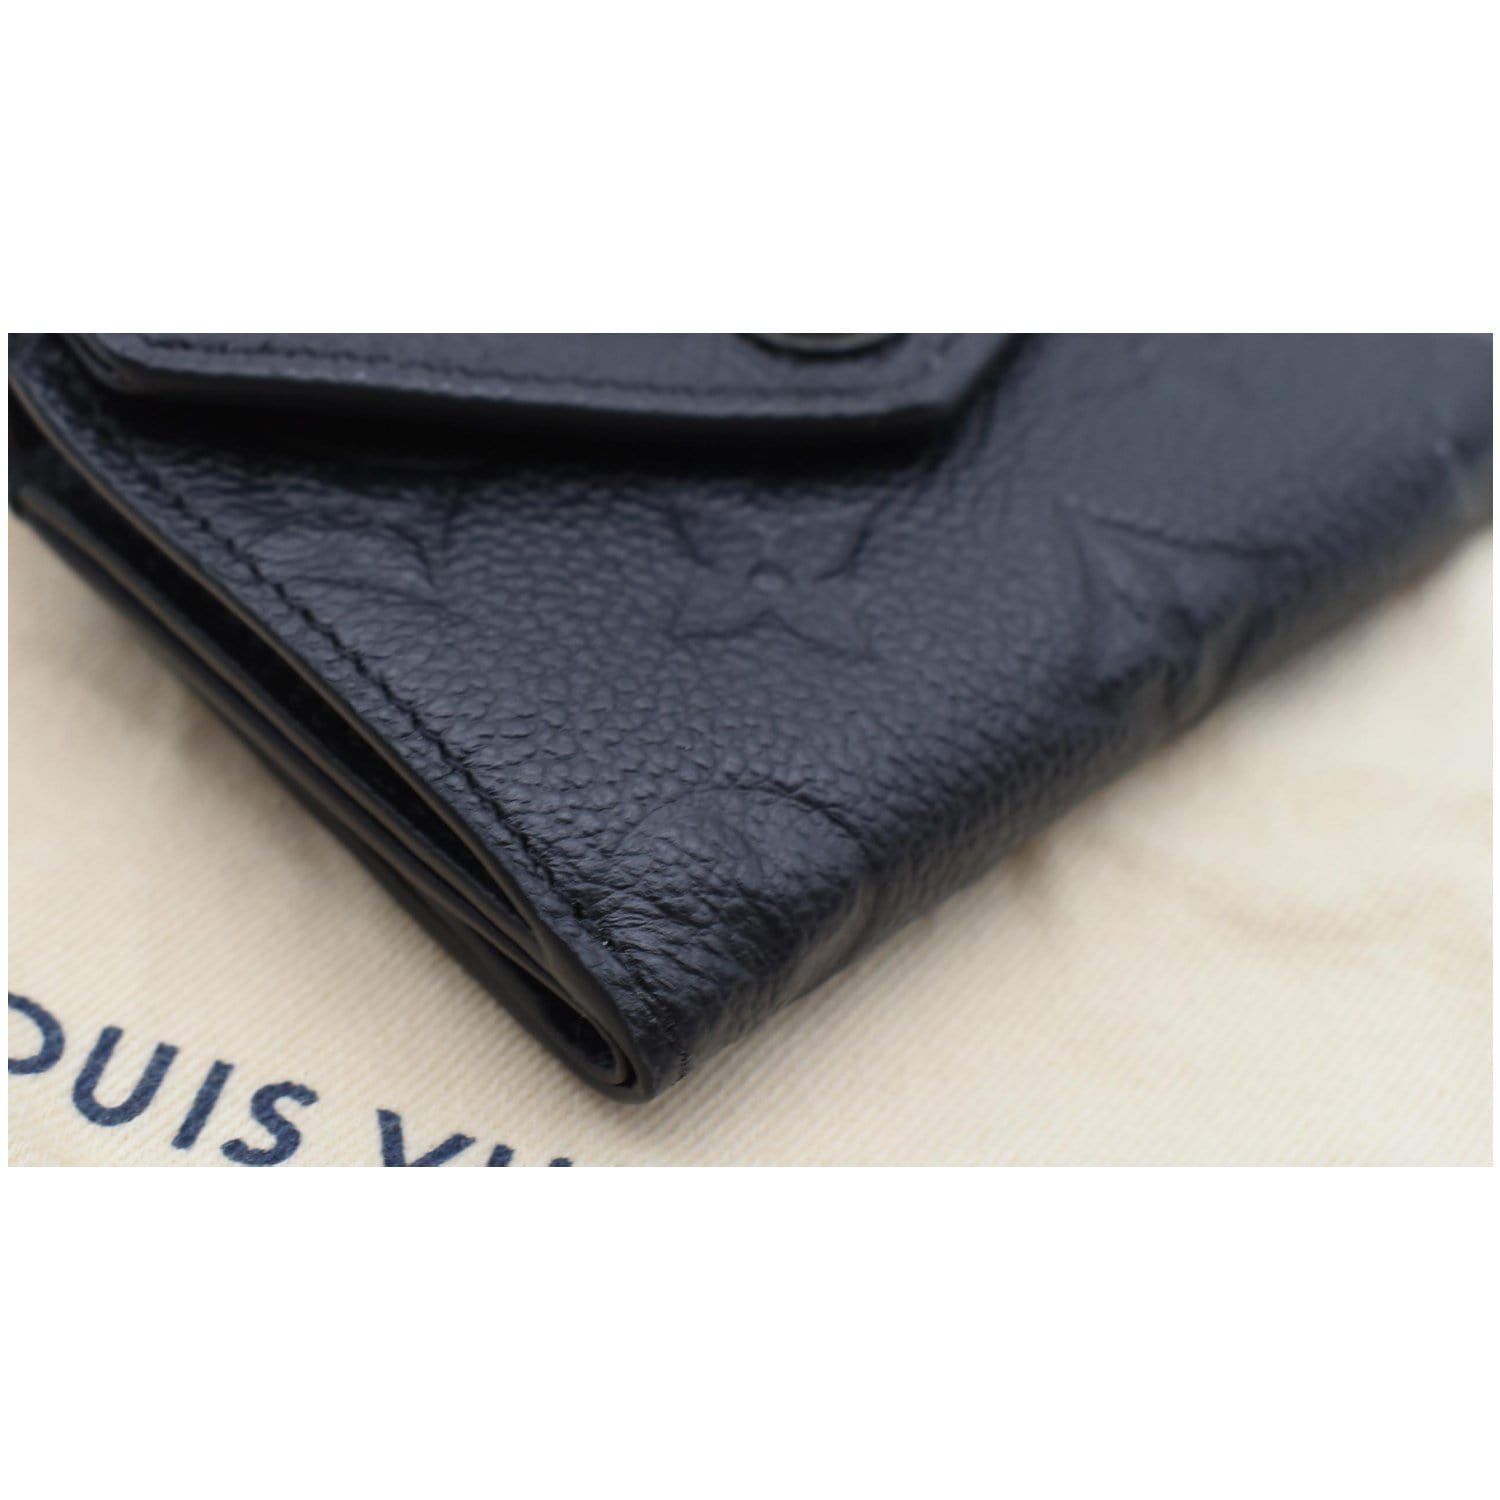 Sell Louis Vuitton Empreinte Compact Curieuse Wallet - Black